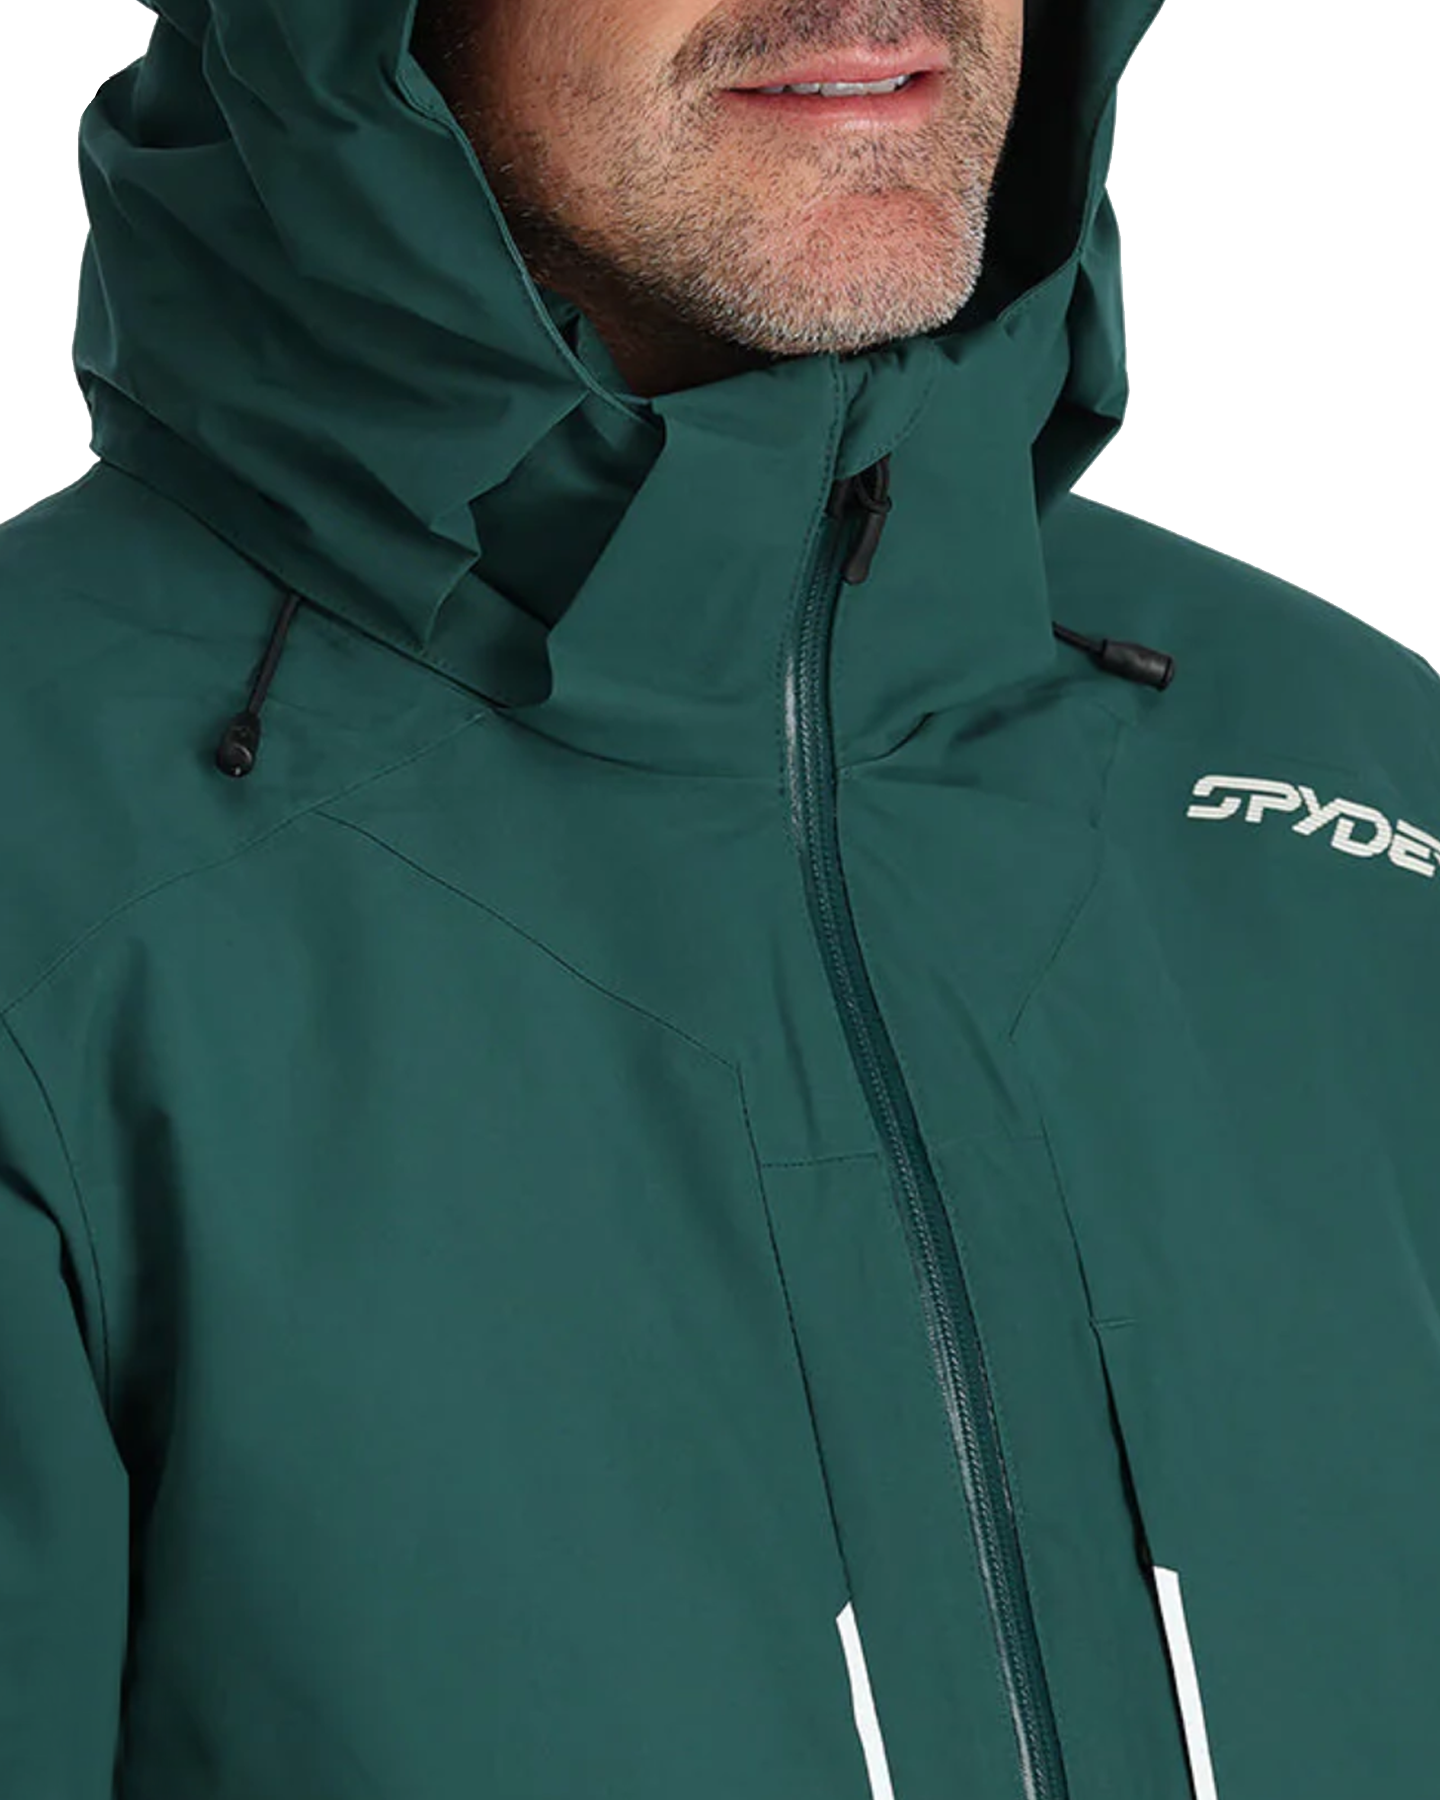 Spyder Primer Jacket - Cypress Green Men's Snow Jackets - SnowSkiersWarehouse